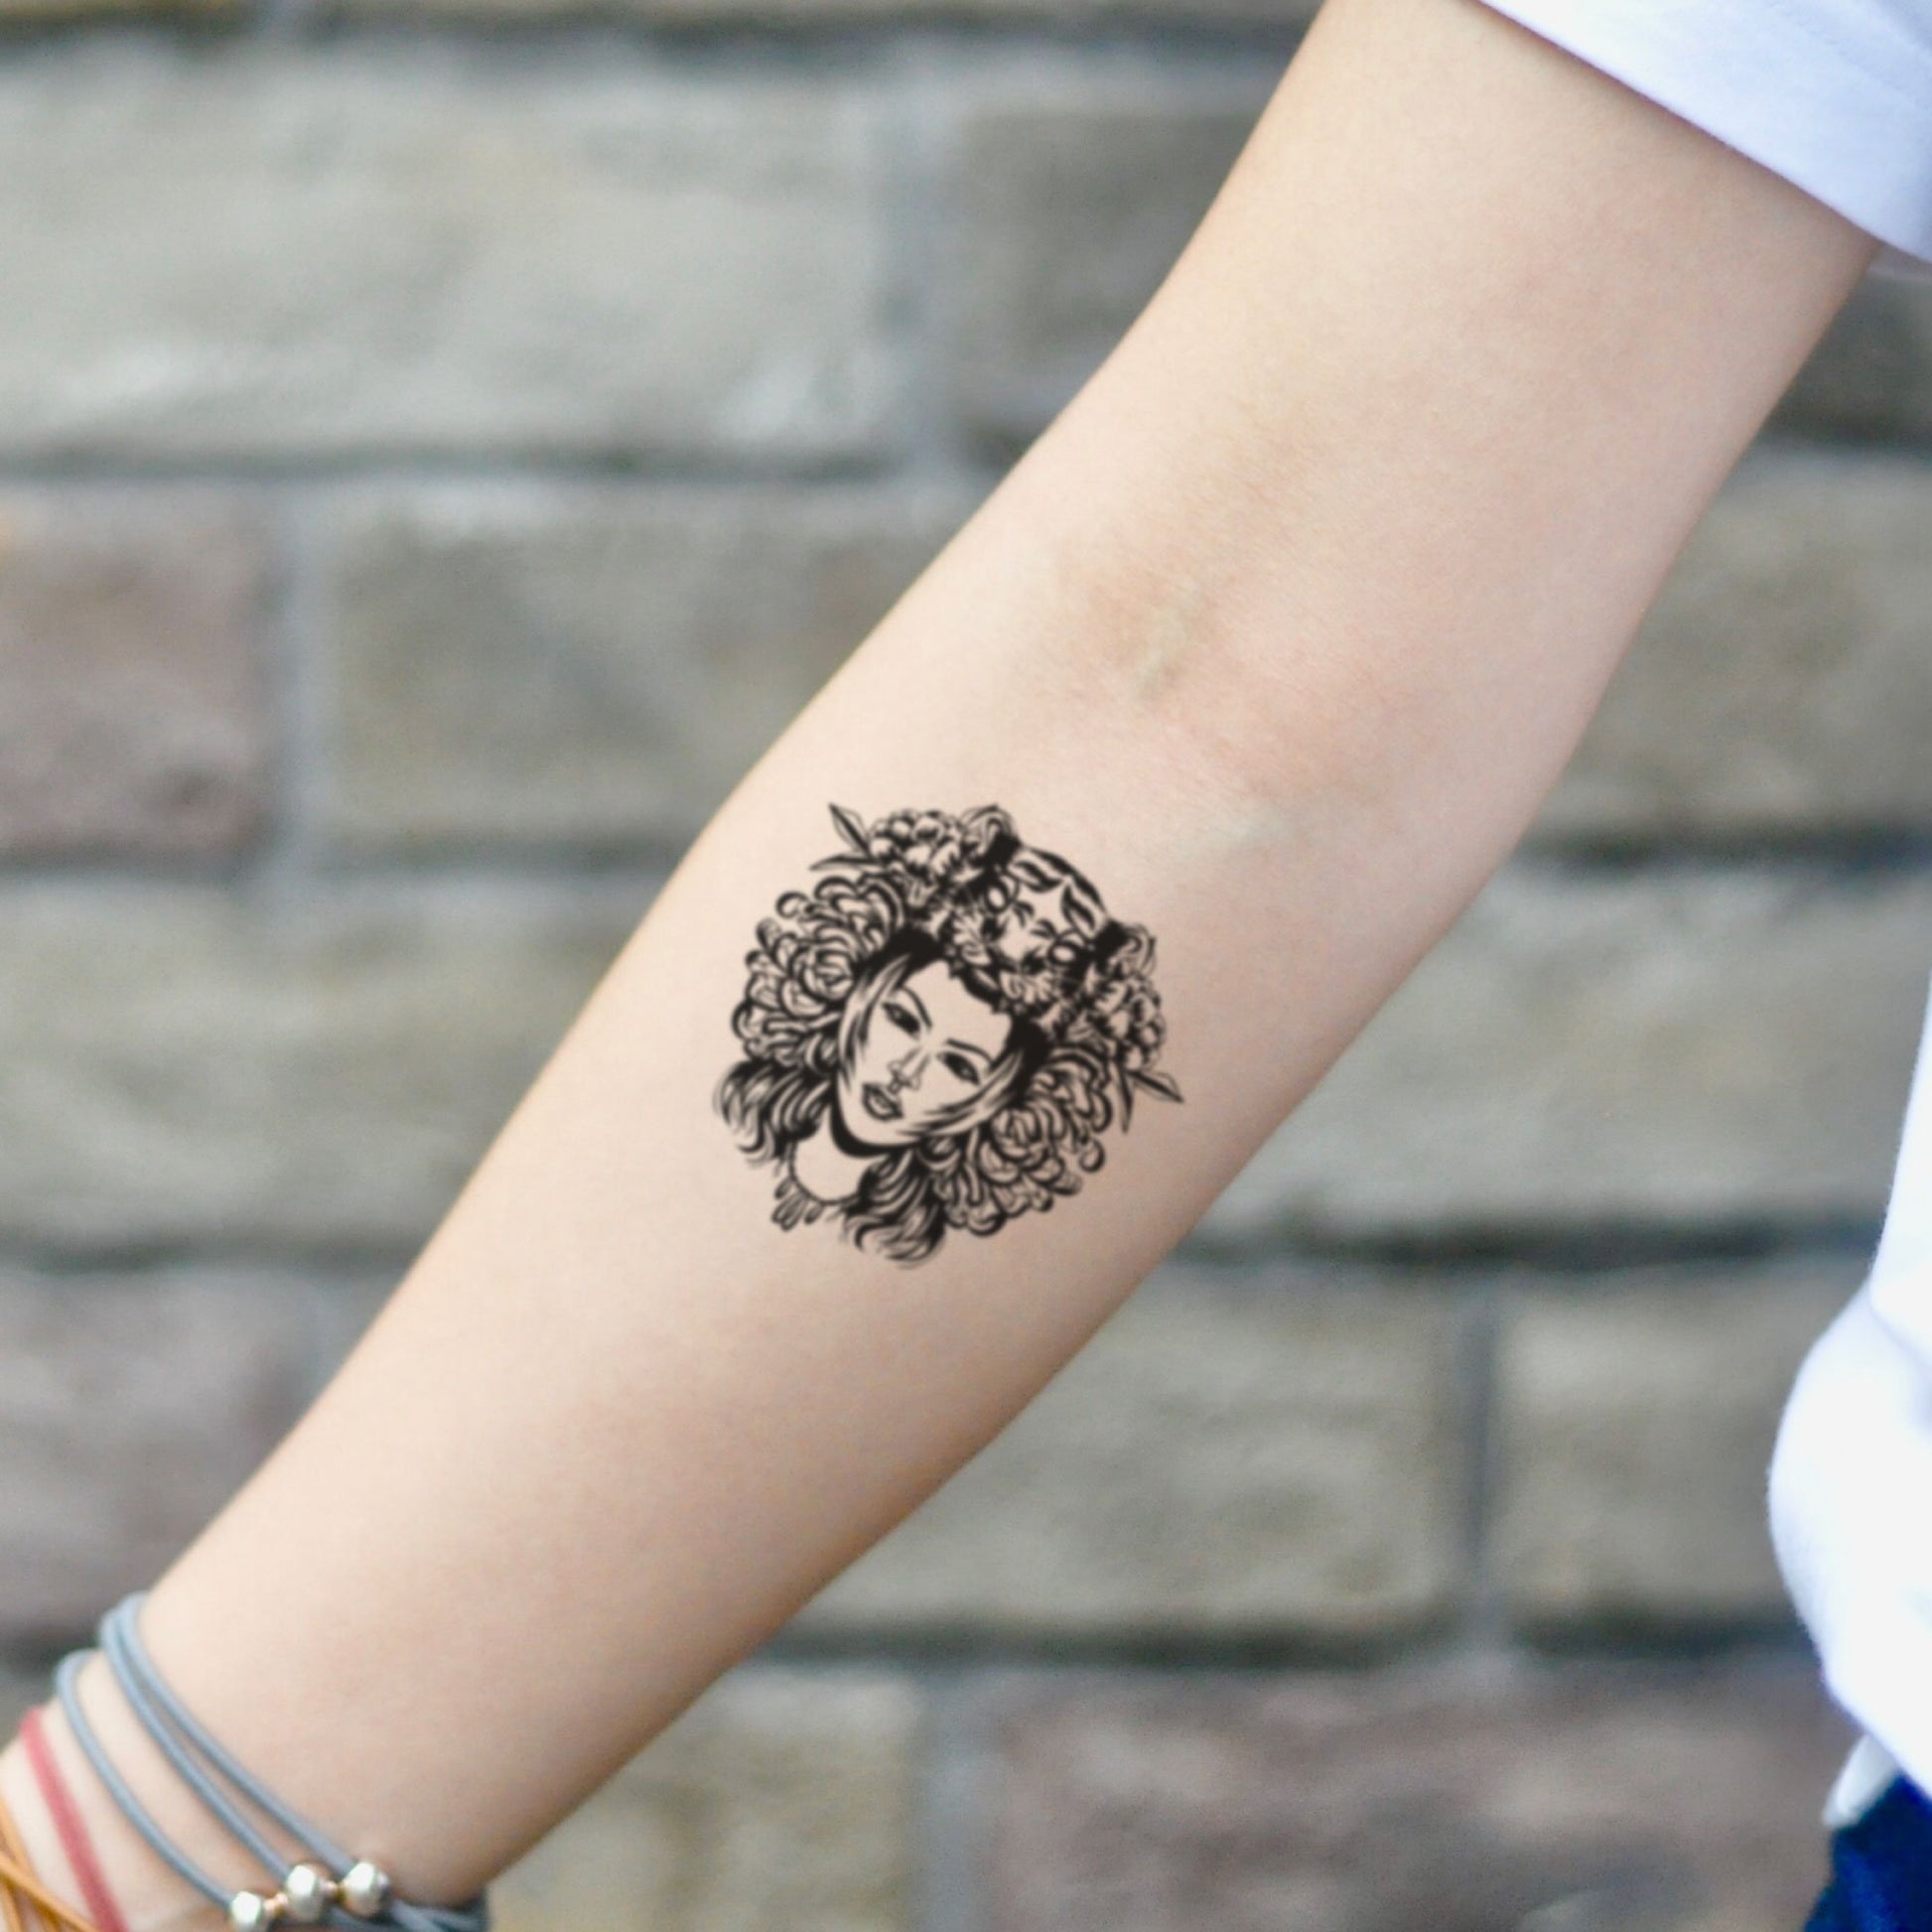 fake small tiger girl illustrative temporary tattoo sticker design idea on inner arm